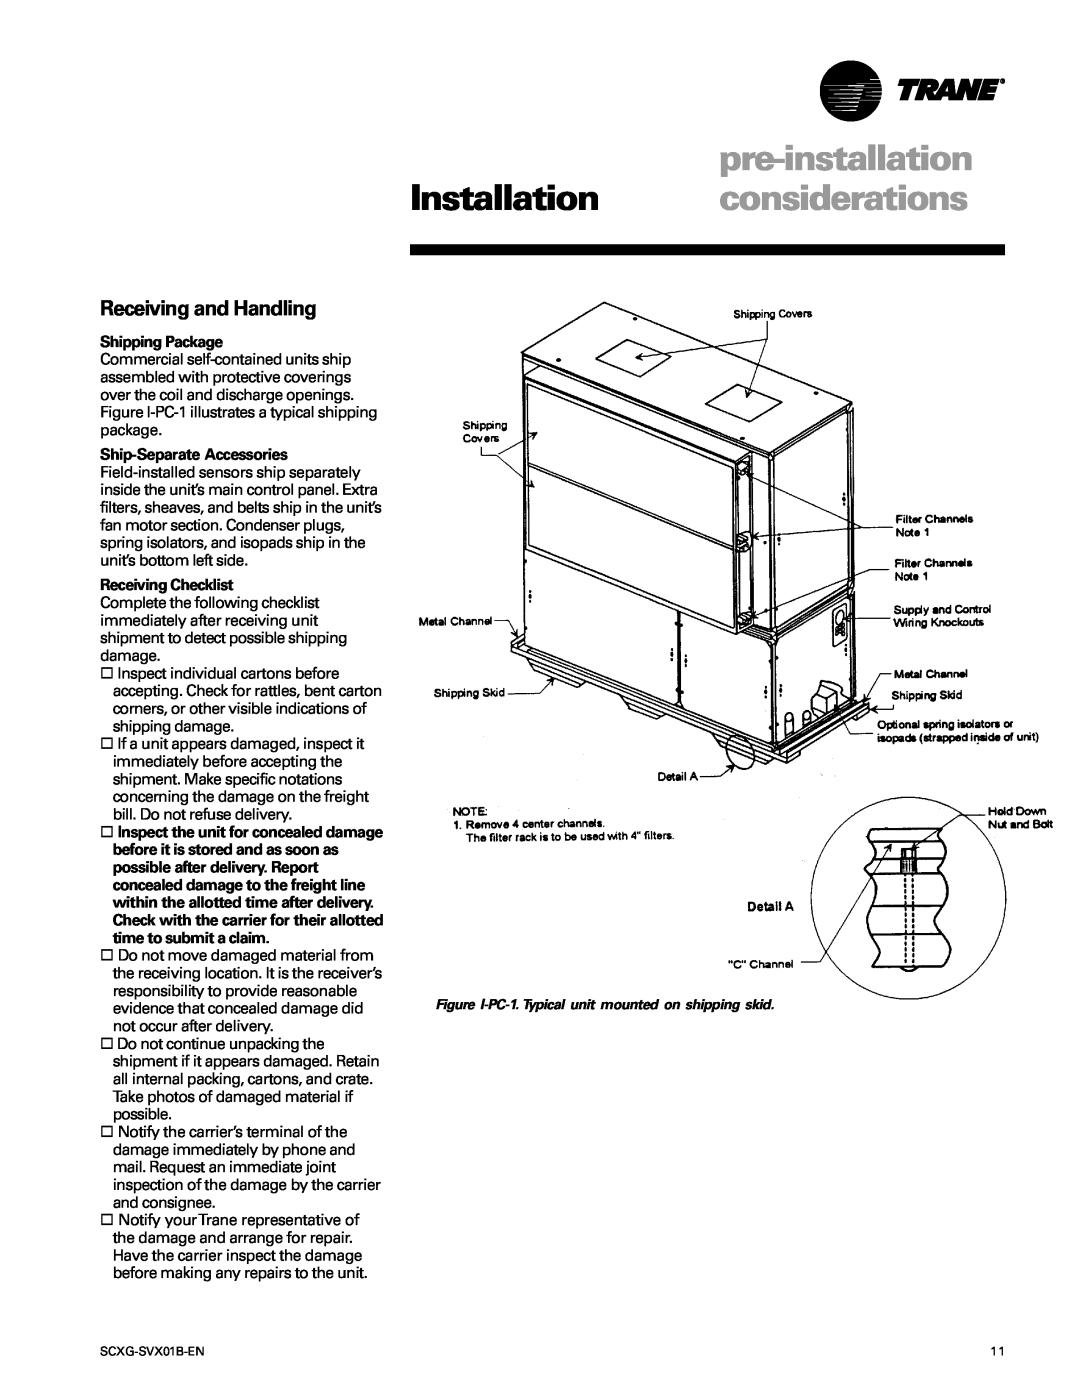 Trane SCXG-SVX01B-EN manual pre-installation Installation considerations, Receiving and Handling, Shipping Package 